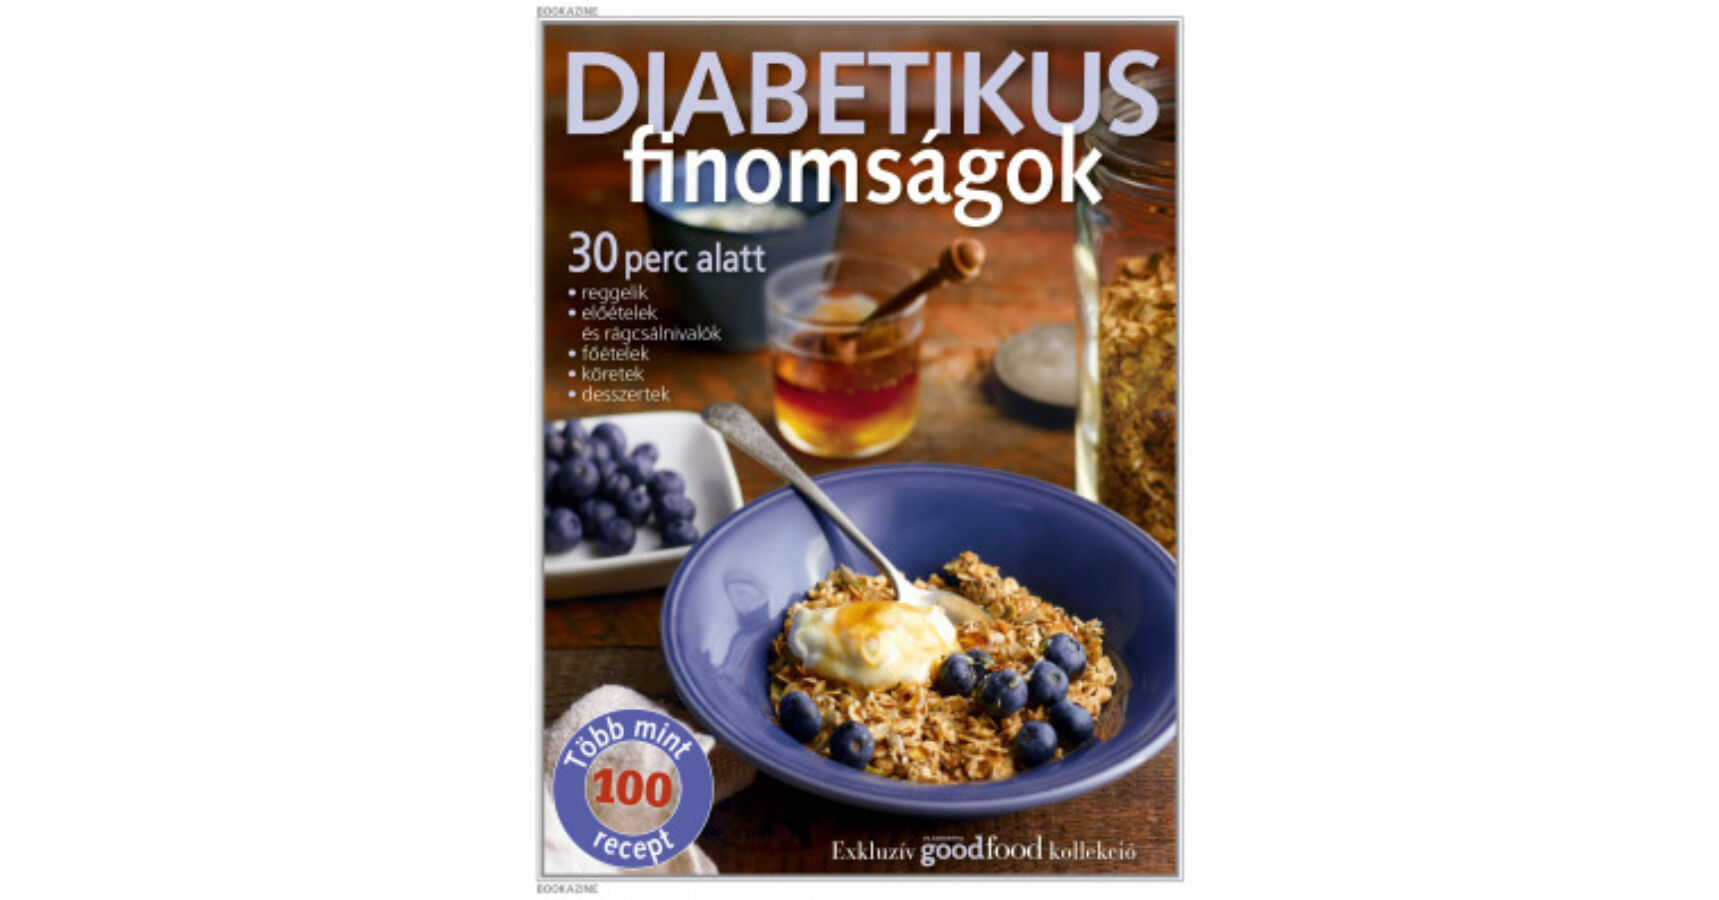 Diabetikus ​finomságok (könyv) - Carla Bardi | pontplaza.hu